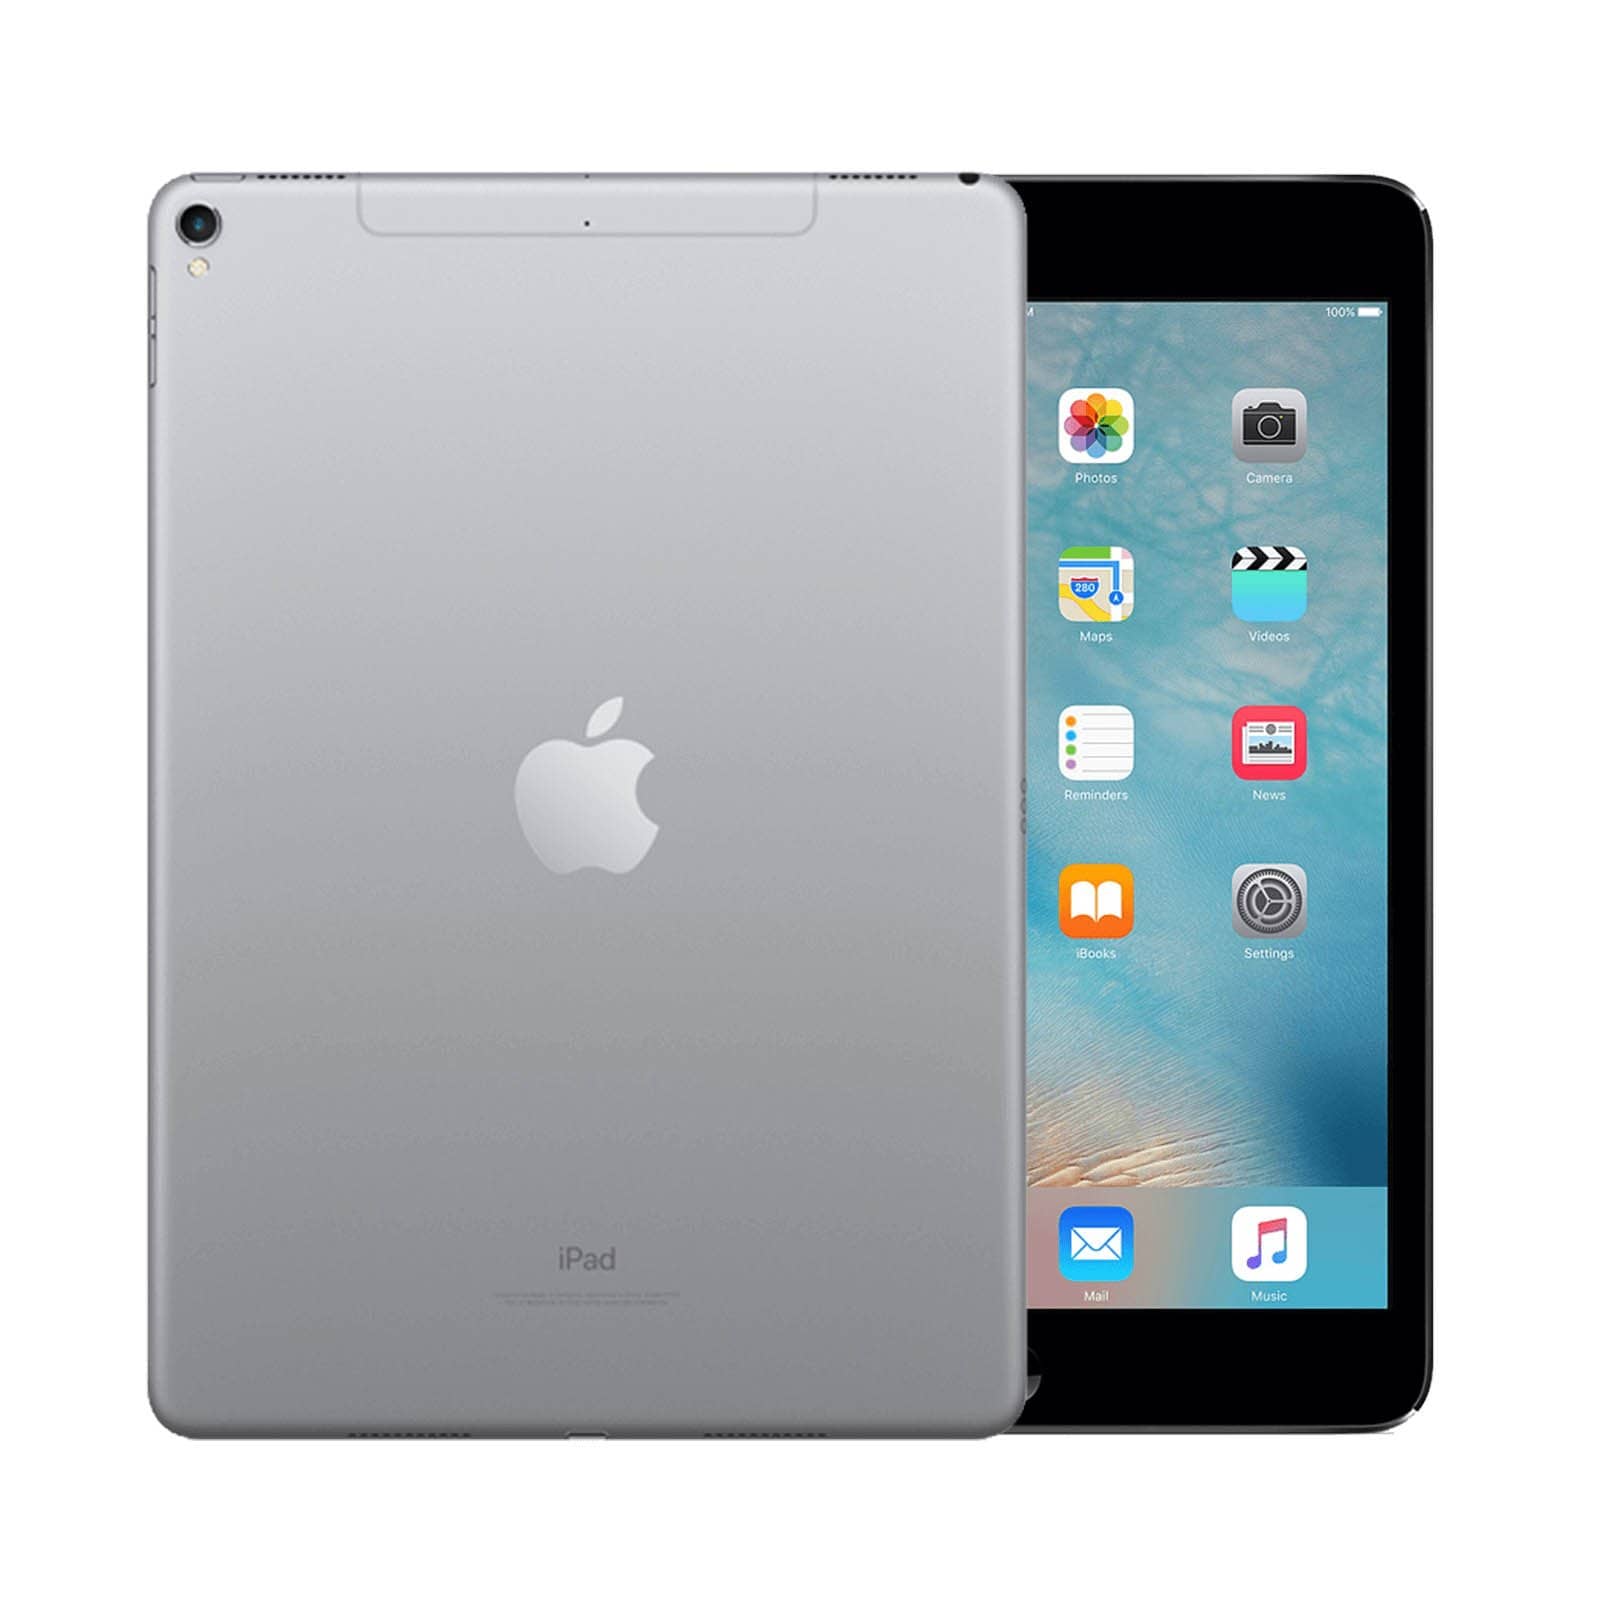 iPad Pro 9.7 Inch 32GB Space Grey Pristine - Unlocked 32GB Space Grey Pristine